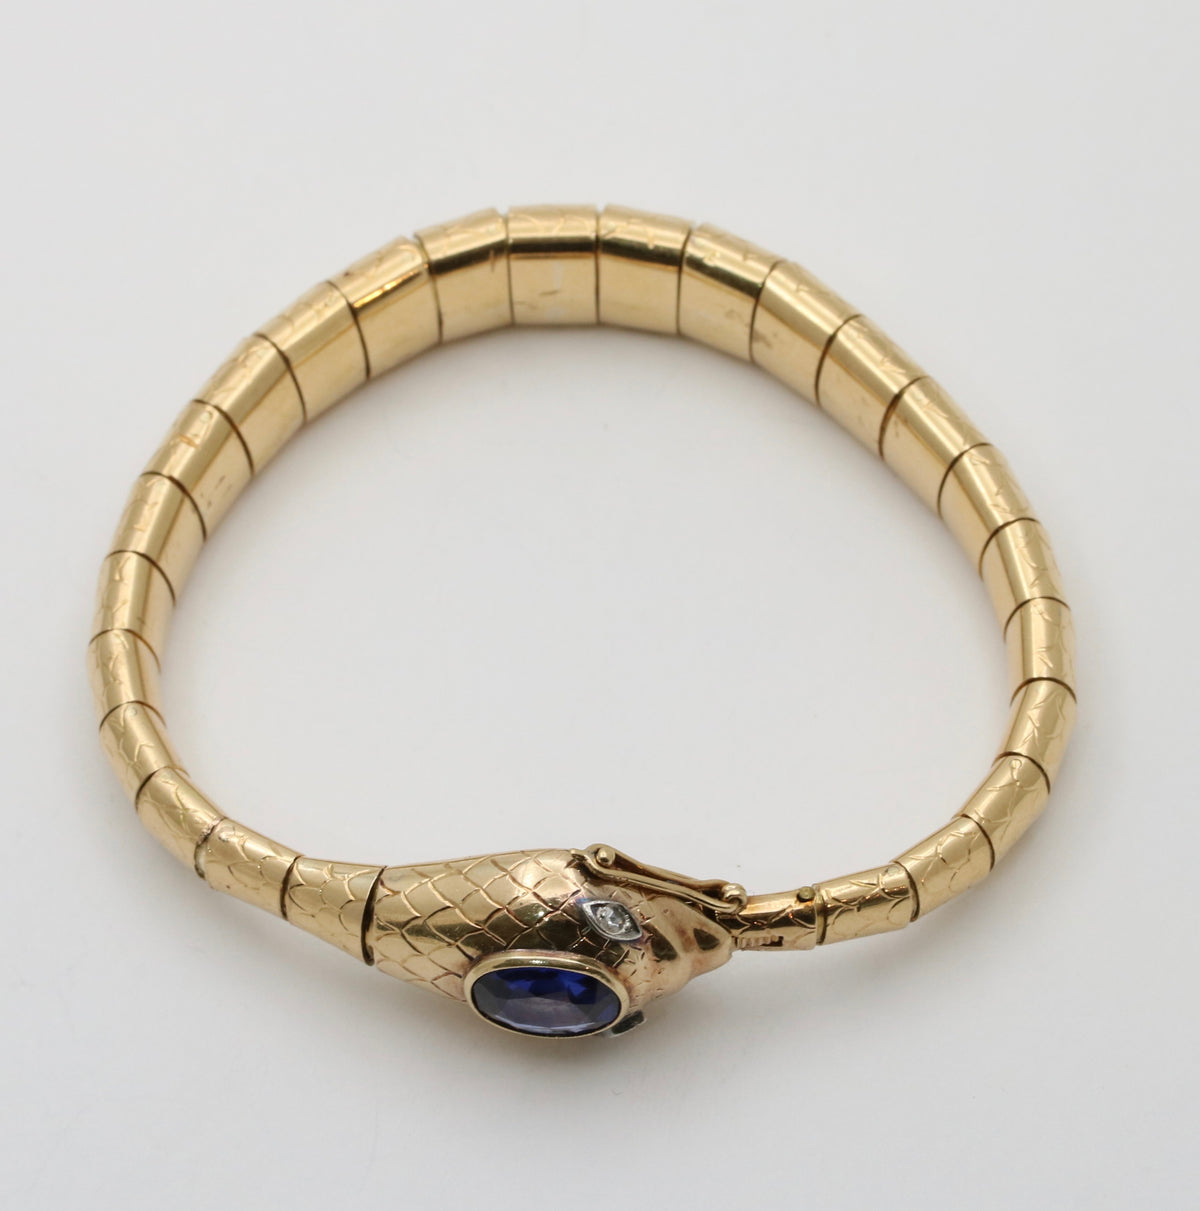 Sapphire & Diamond Snake Bangle Bracelet 14K Yellow Gold